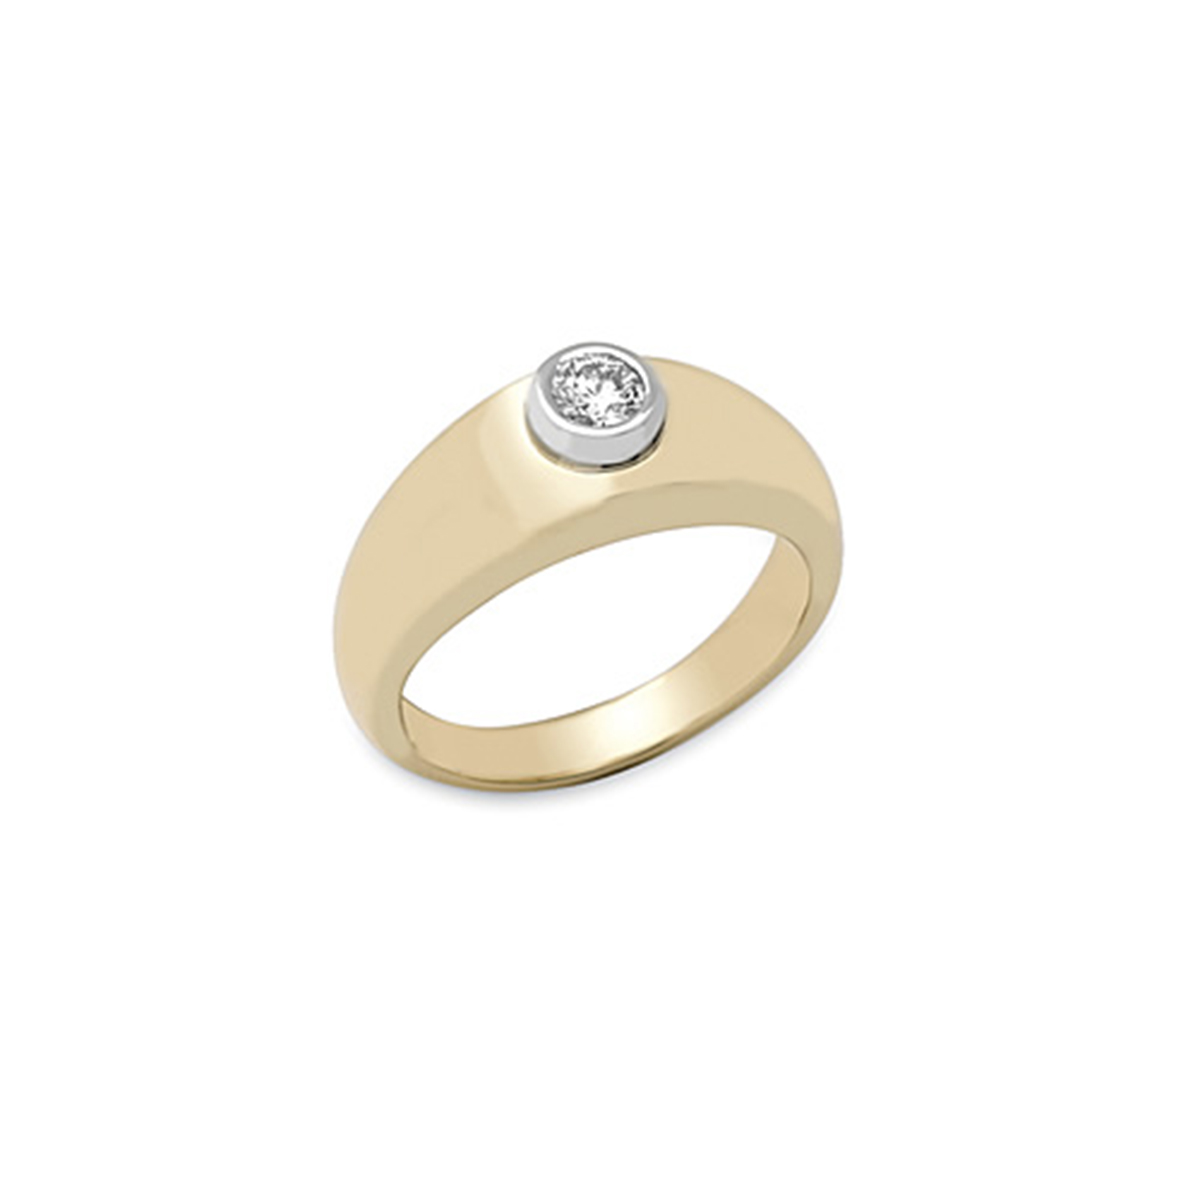 SRH Images_009_Tu-Tone Gold Ring with Diamond.jpg